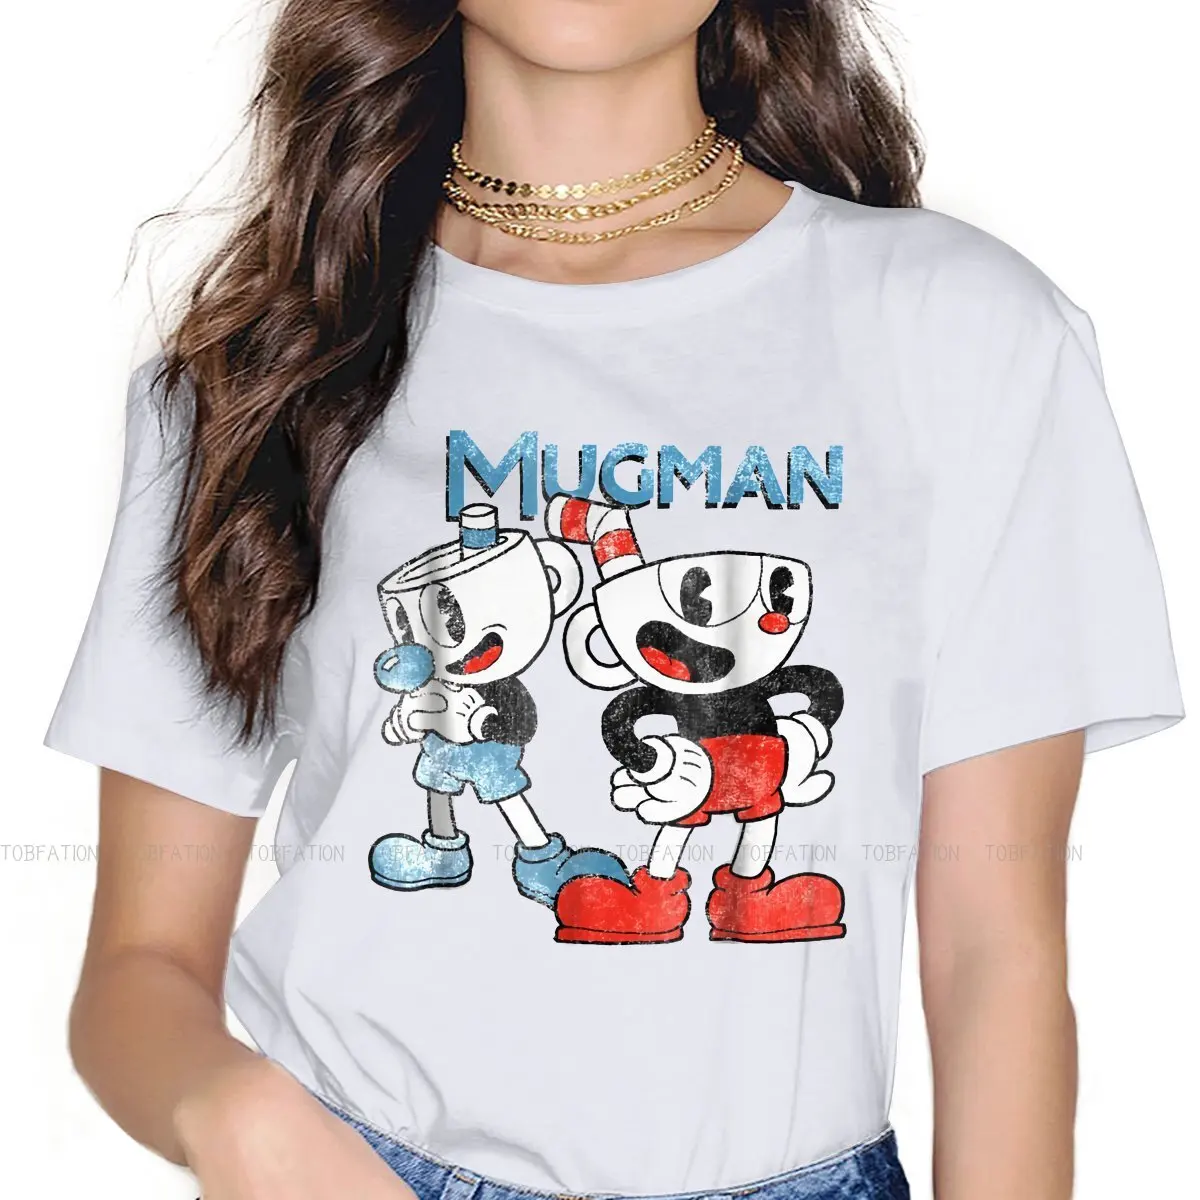 

Dynamic Duo Graphic TShirt For Women Cuphead Mugman Game Tops Cute Lady T Shirt 5XL Soft Printed Loose